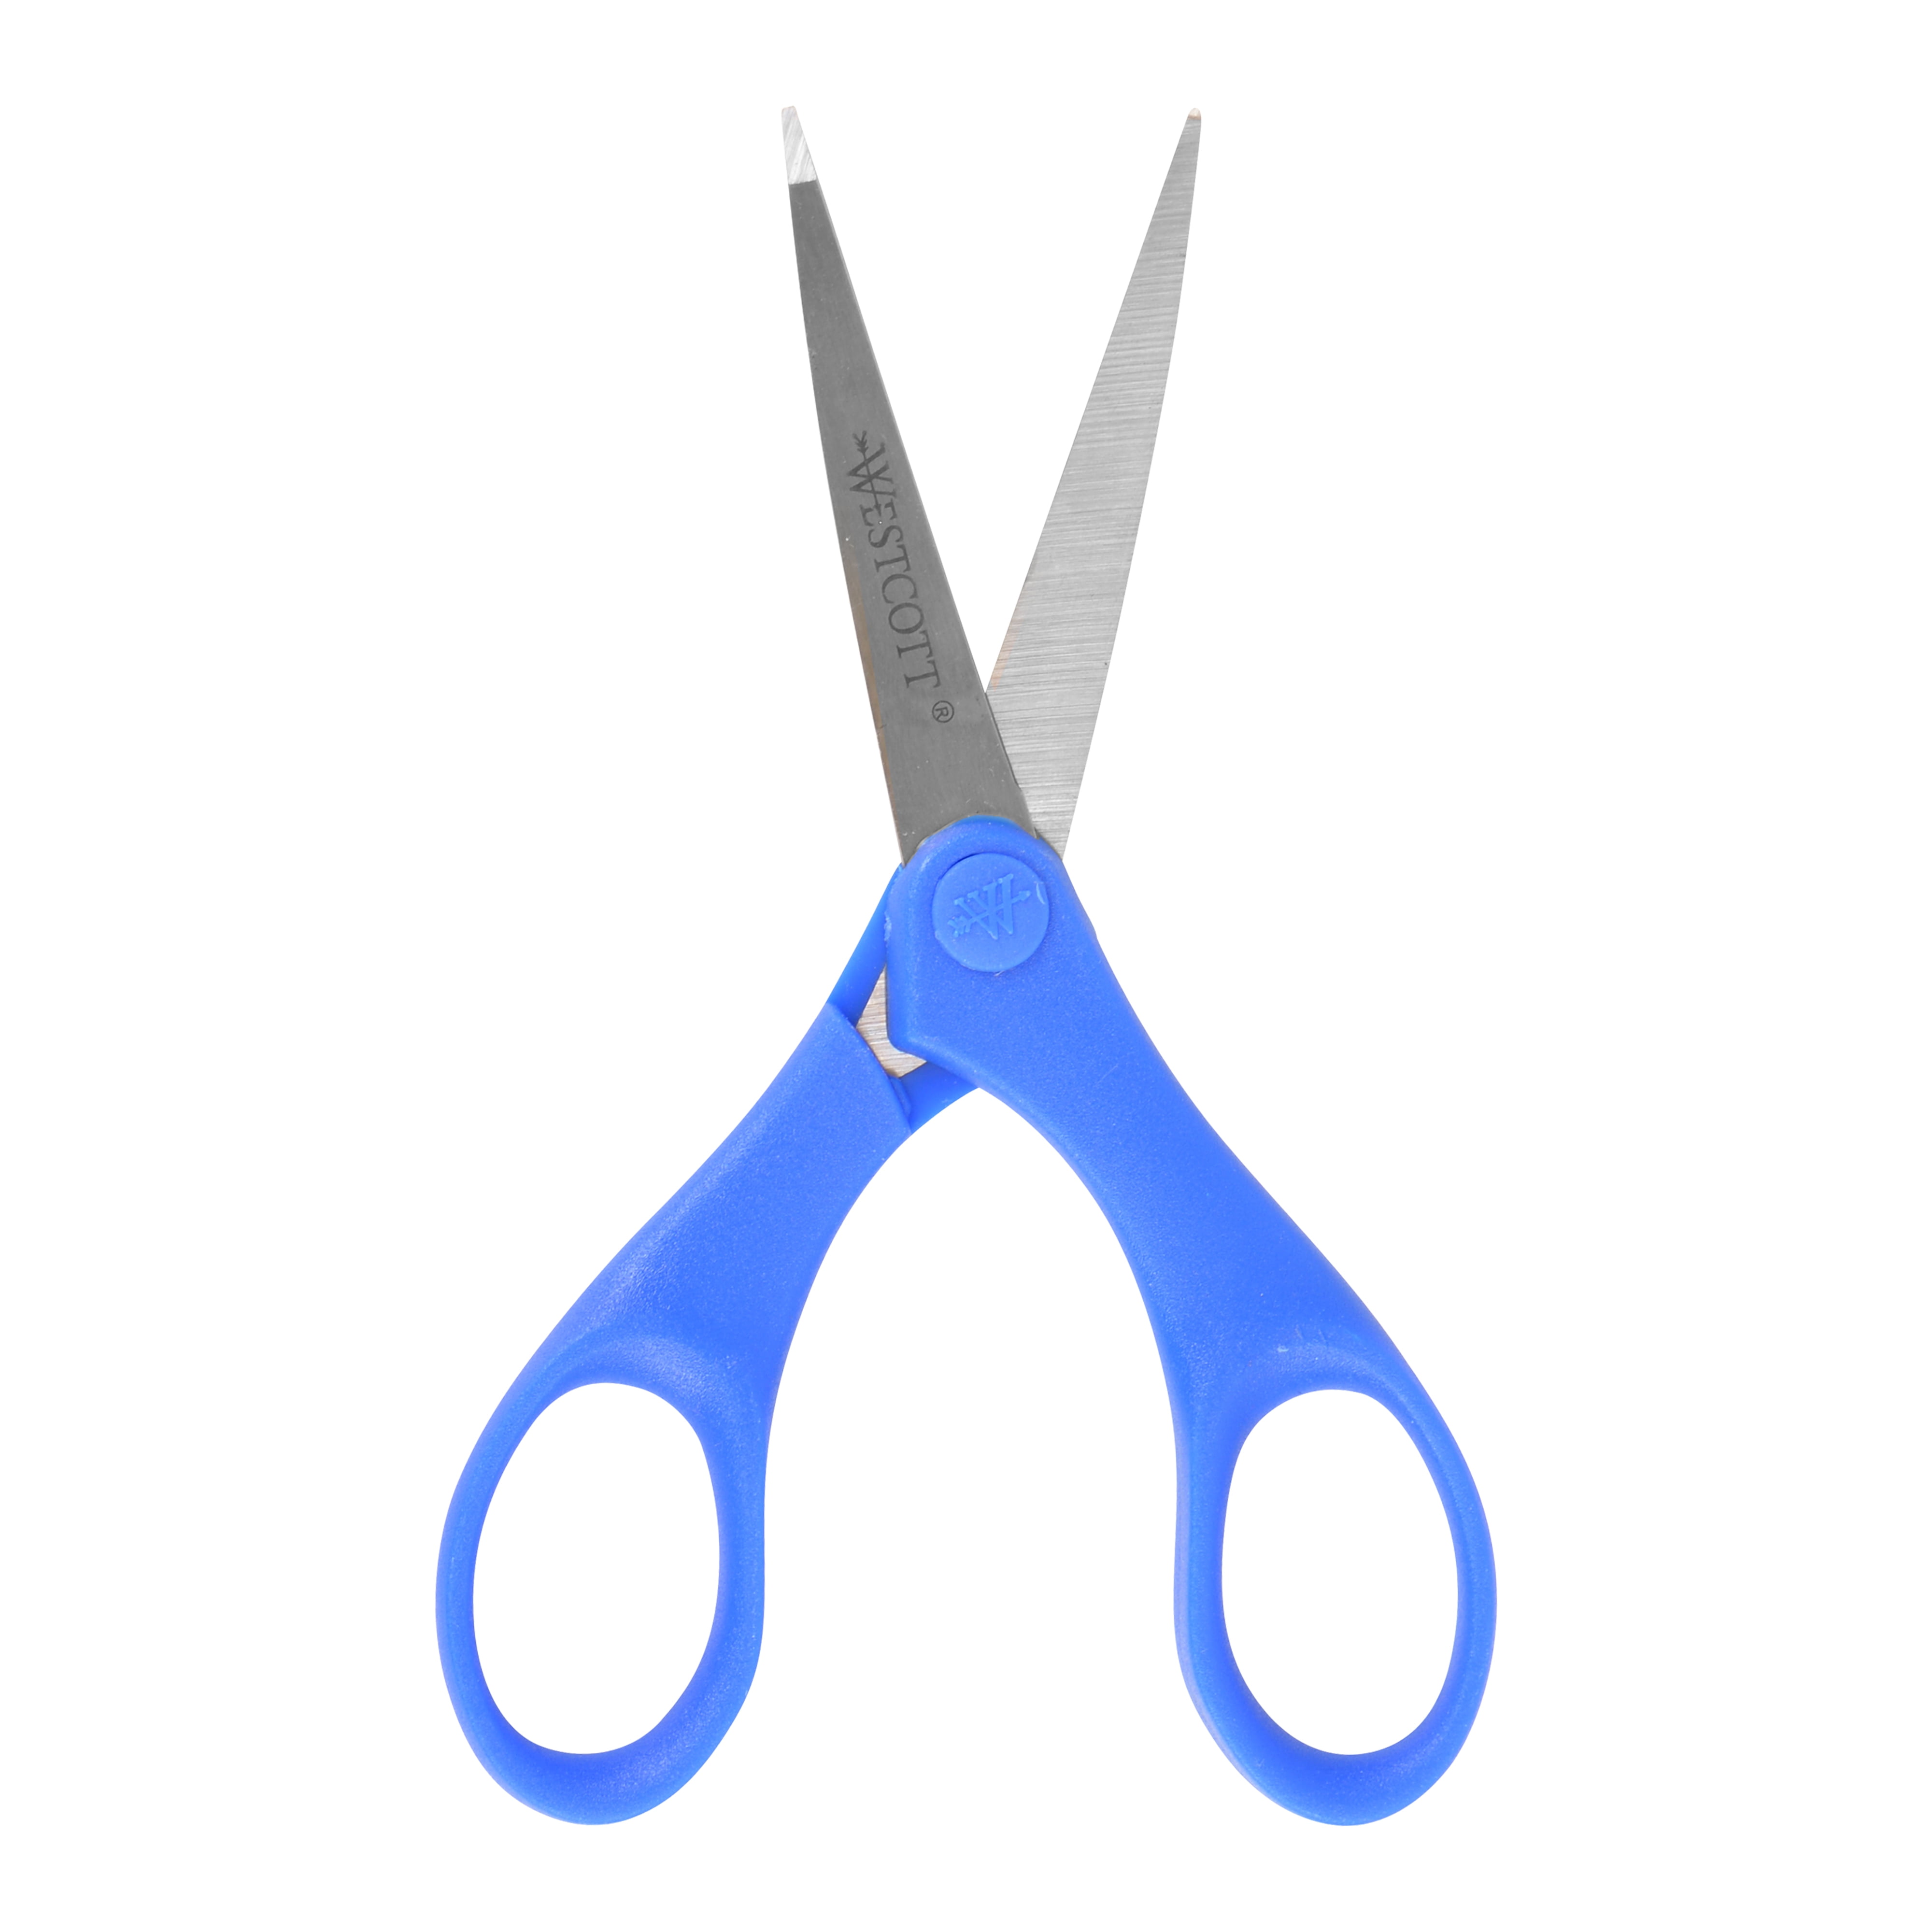 TeachersParadise - Westcott® Preschool Training Scissors, 5in - ACM15663